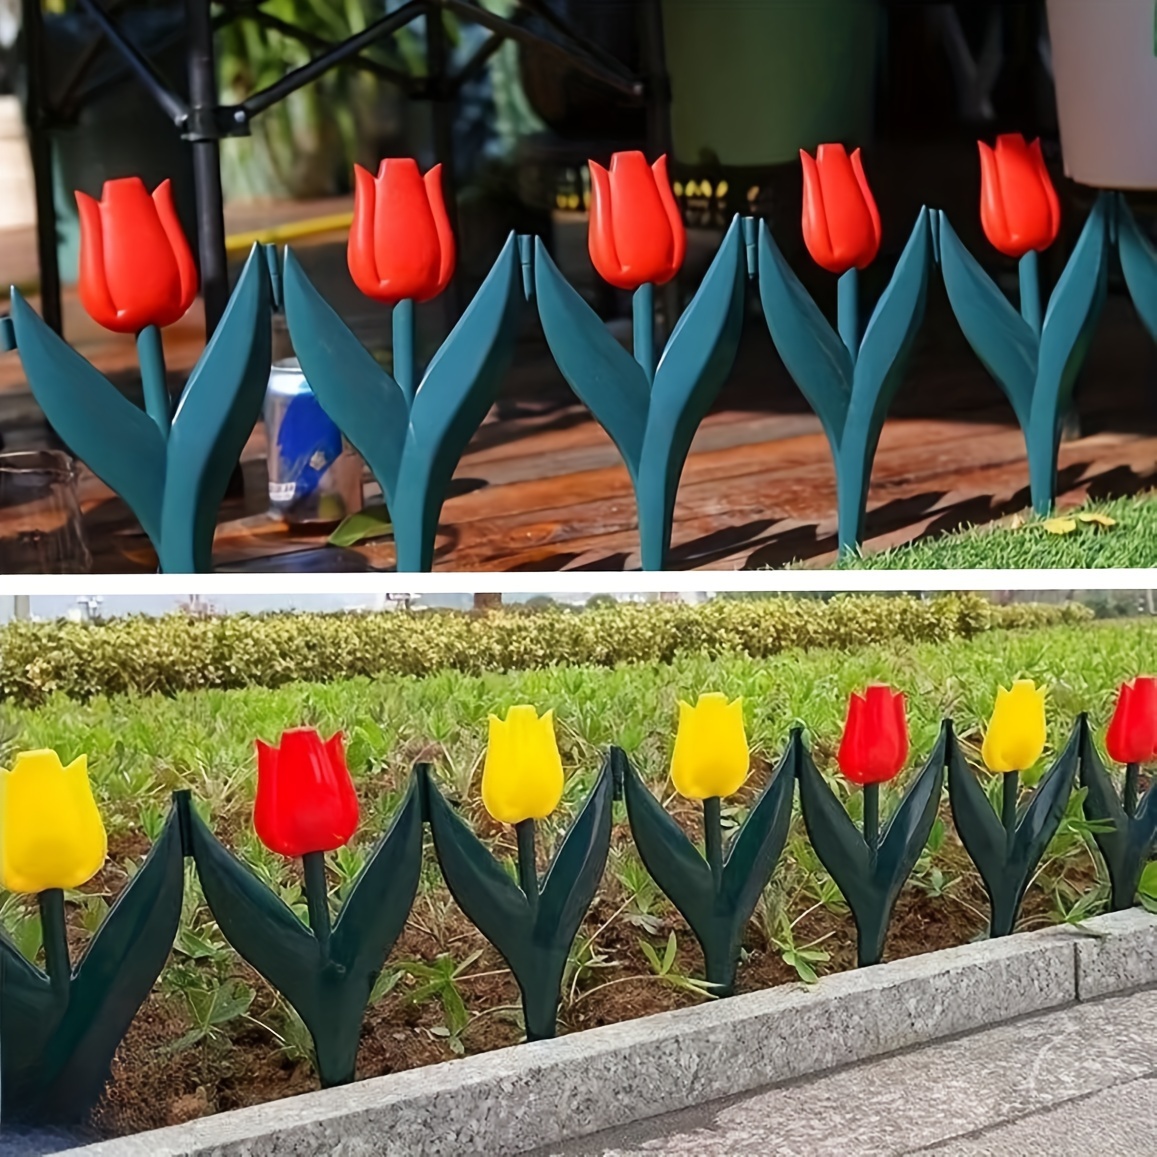 

10pcs Plastic Tulip Flower Shape Garden Fence, Easy Assemble Decorative Edging For Fairy Garden, Yard, Outdoor Decor, Multipurpose, Red/yellow Tulips Design